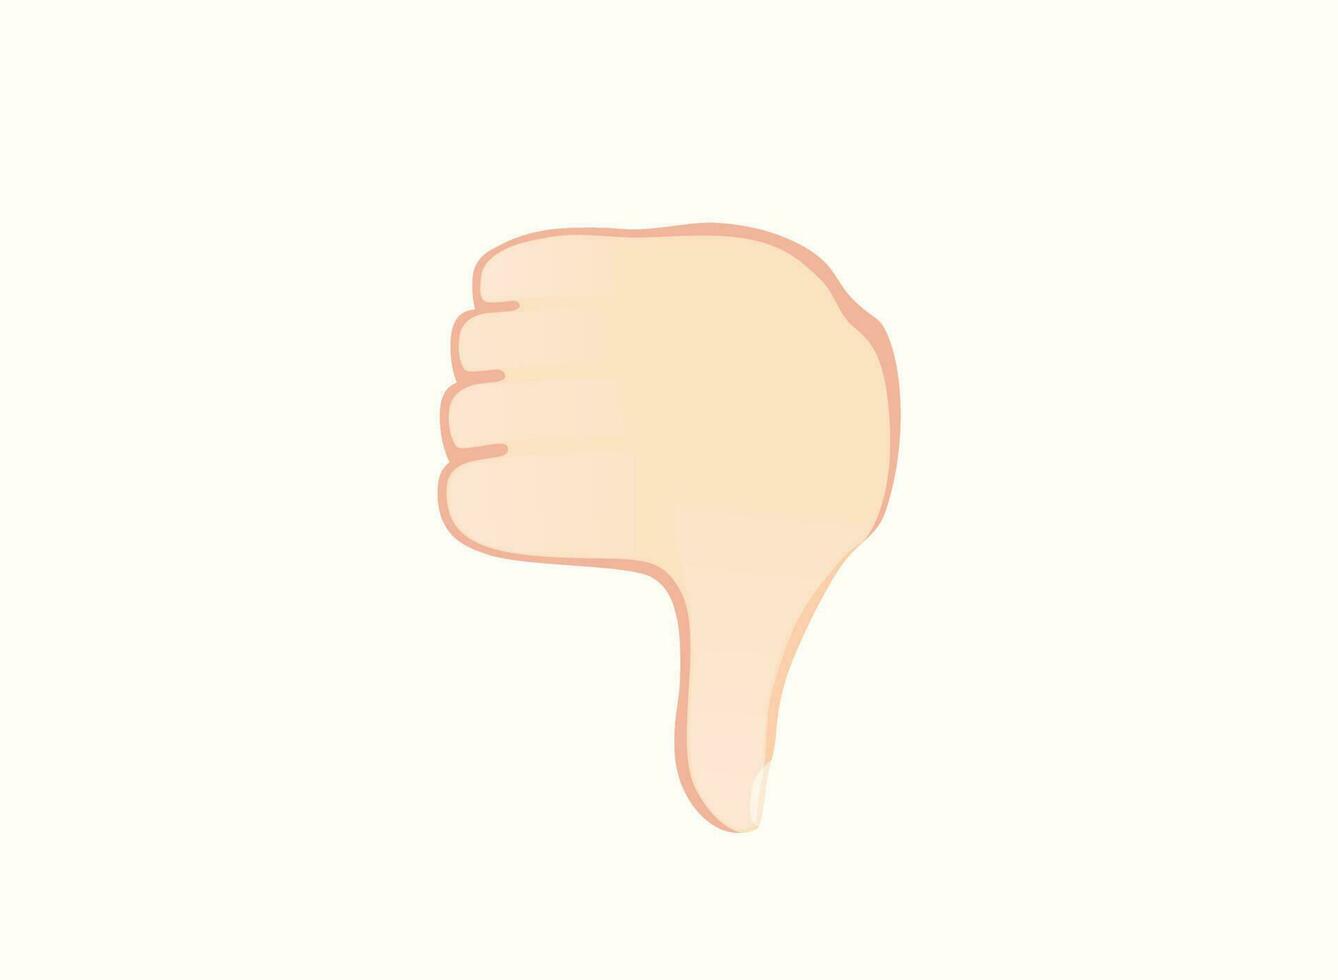 Thumbs down icon. Hand gesture emoji vector illustration